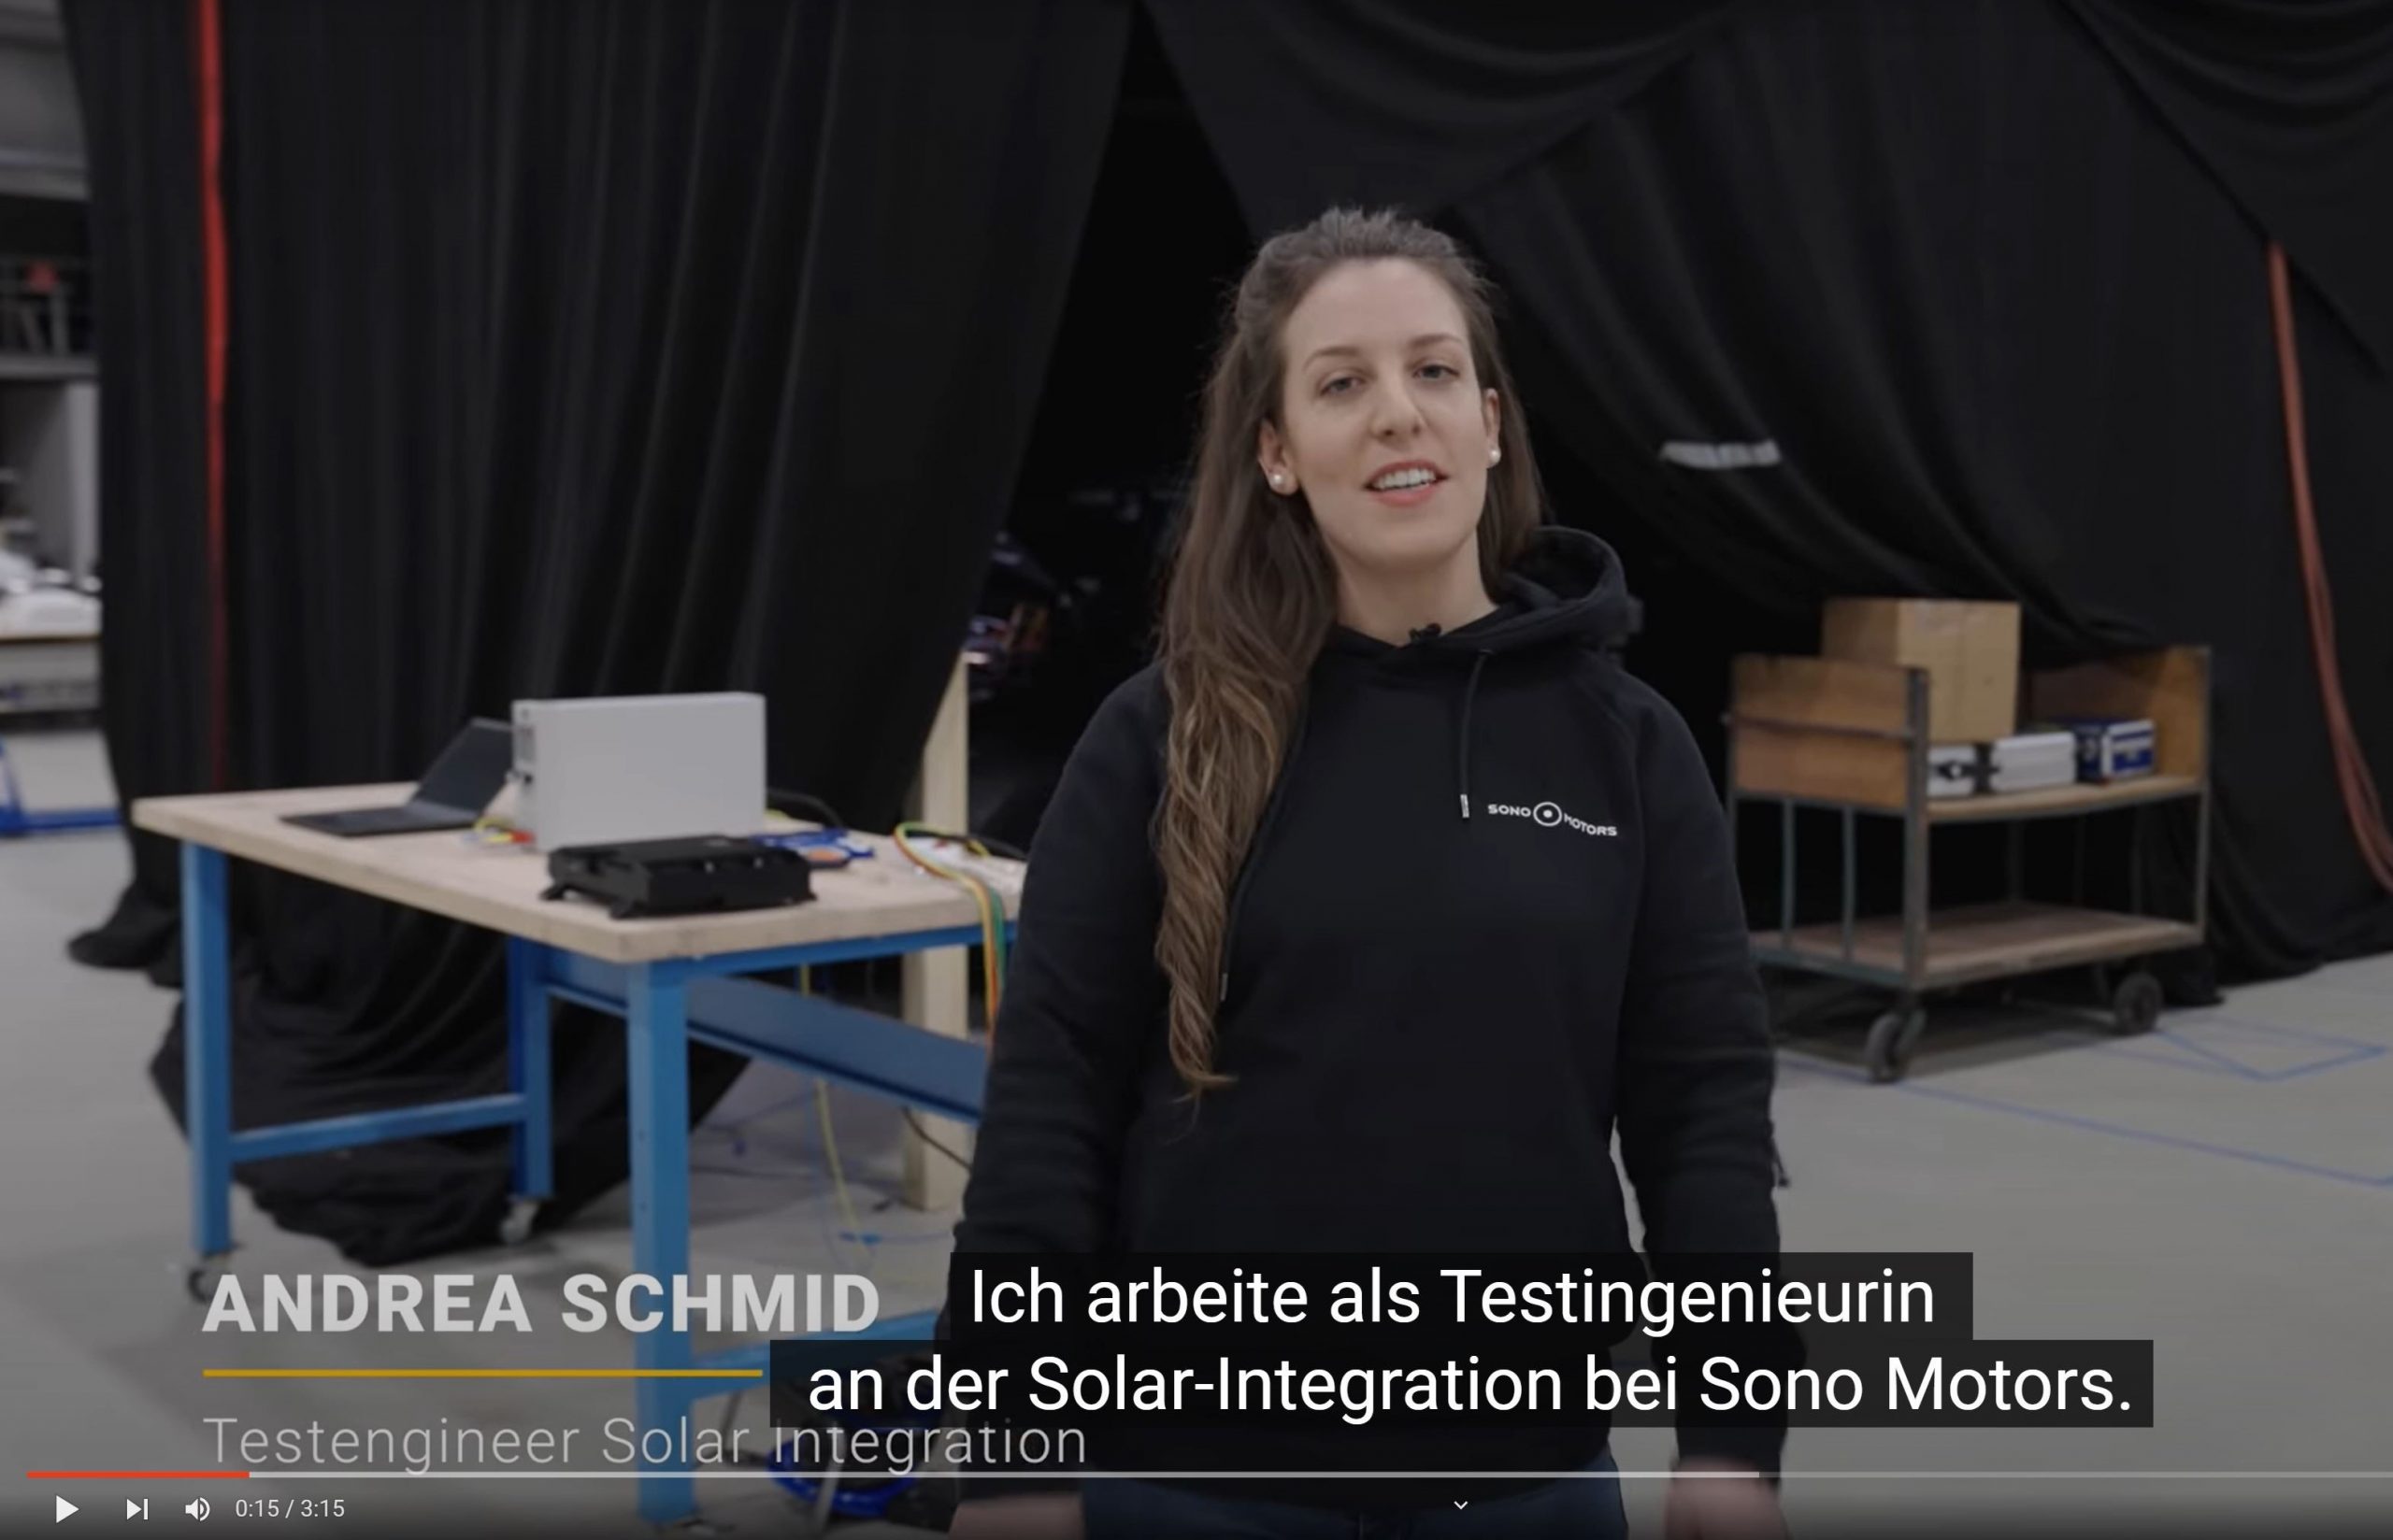 Andrea Schmid ist Testingenieurin für Solar-Integration bei Sono Motors